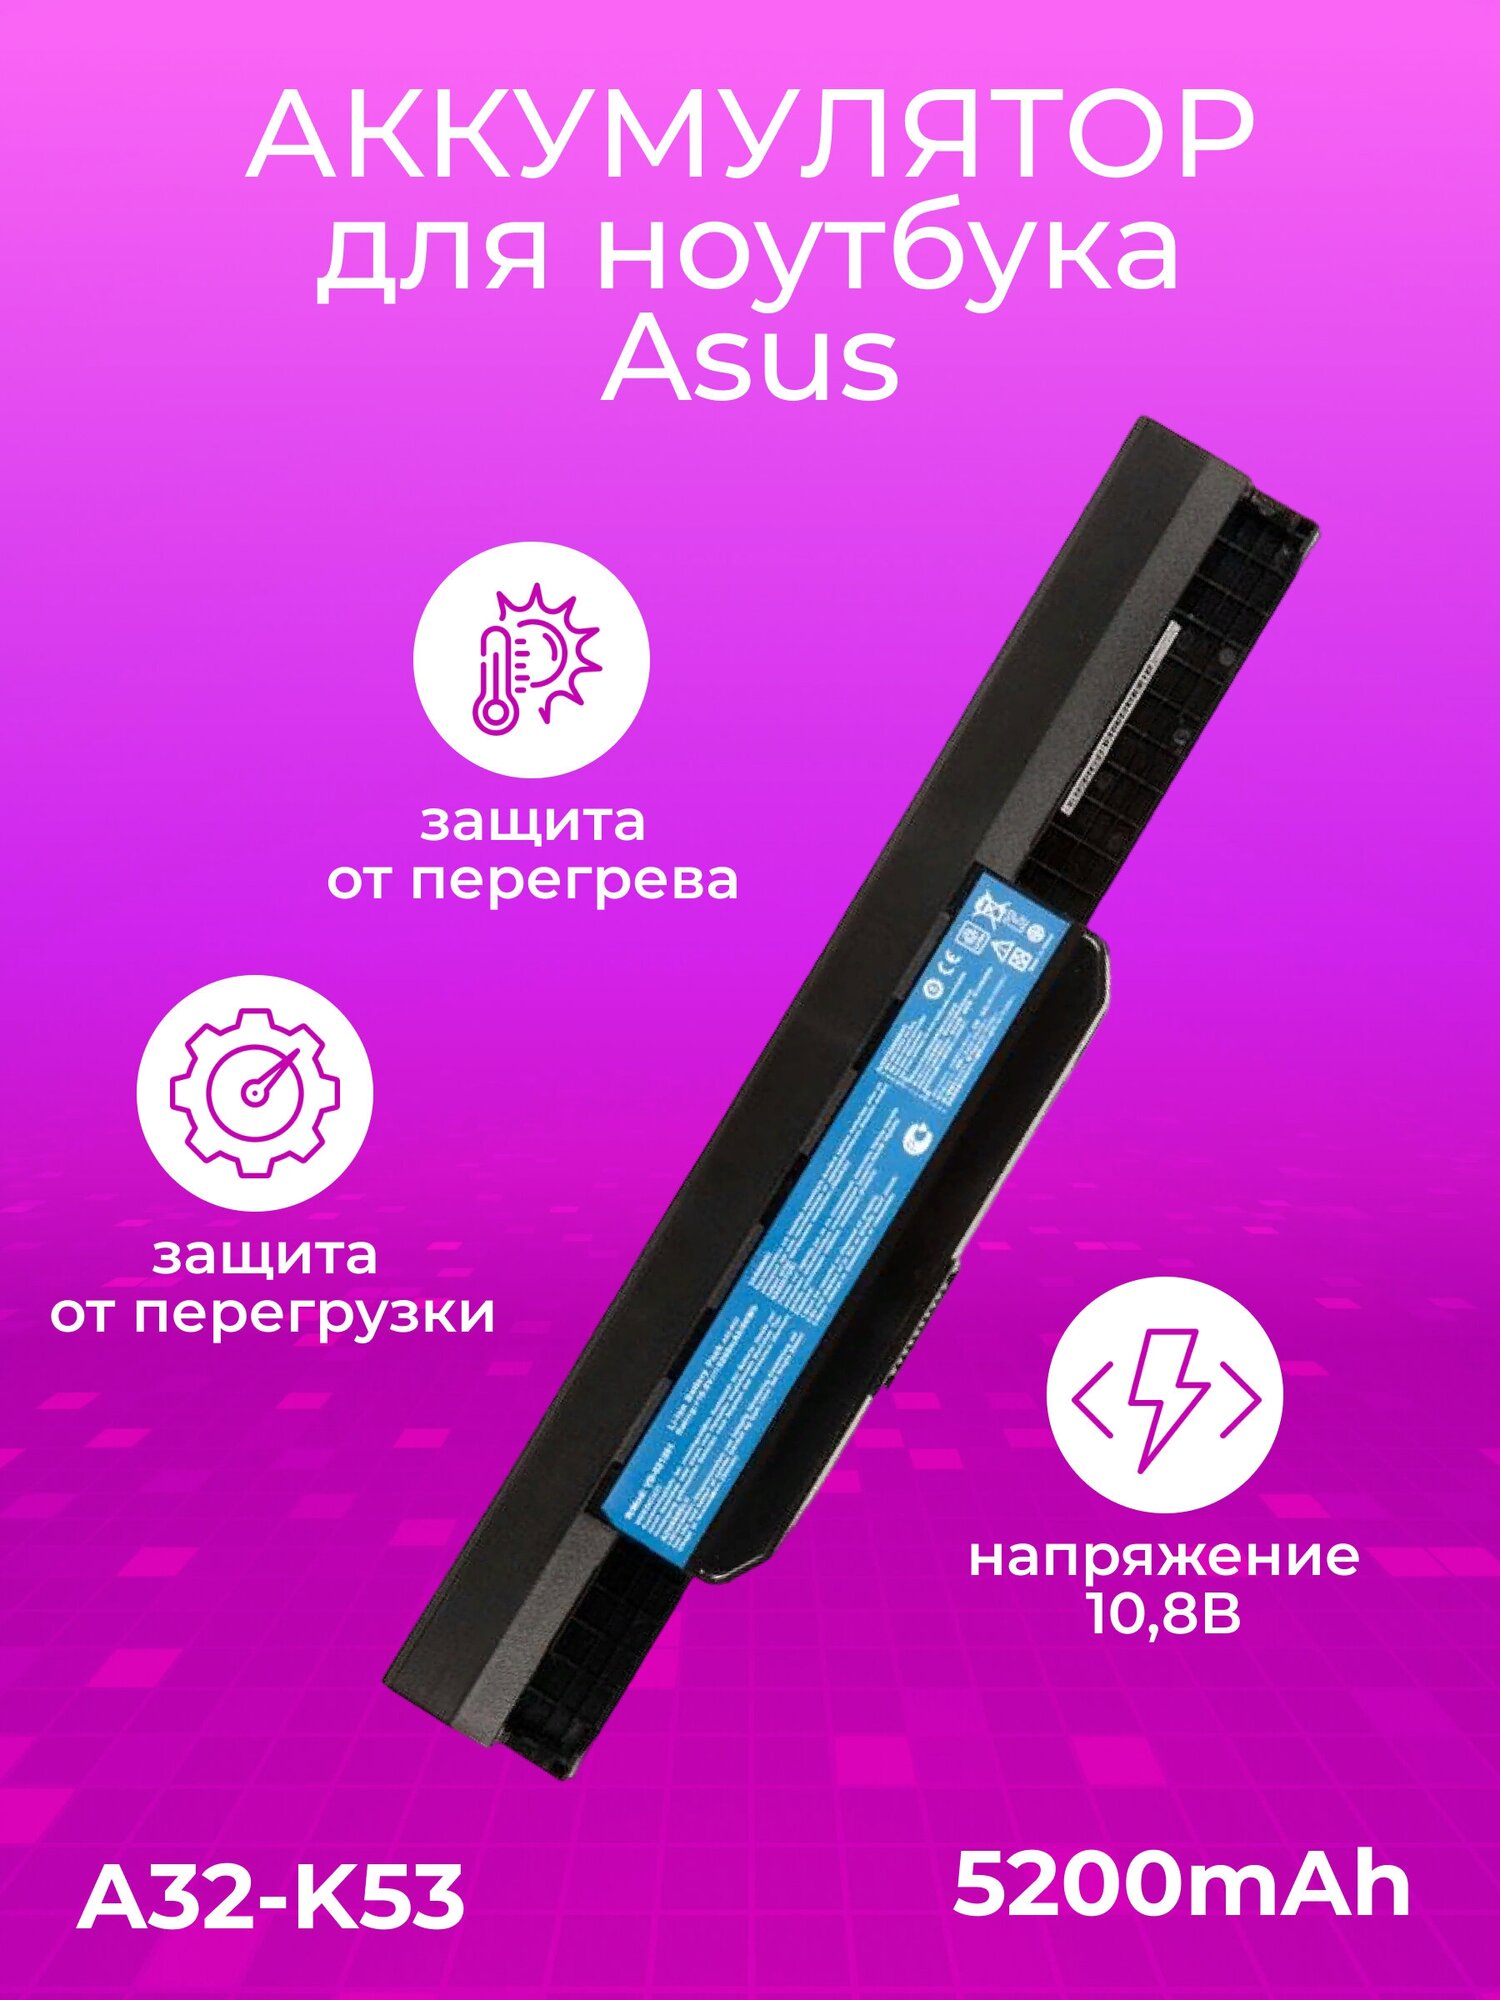 Аккумулятор для Asus A43 A53 K43 K53 X43 X44 X53 X54 5200mAh 108V OEM